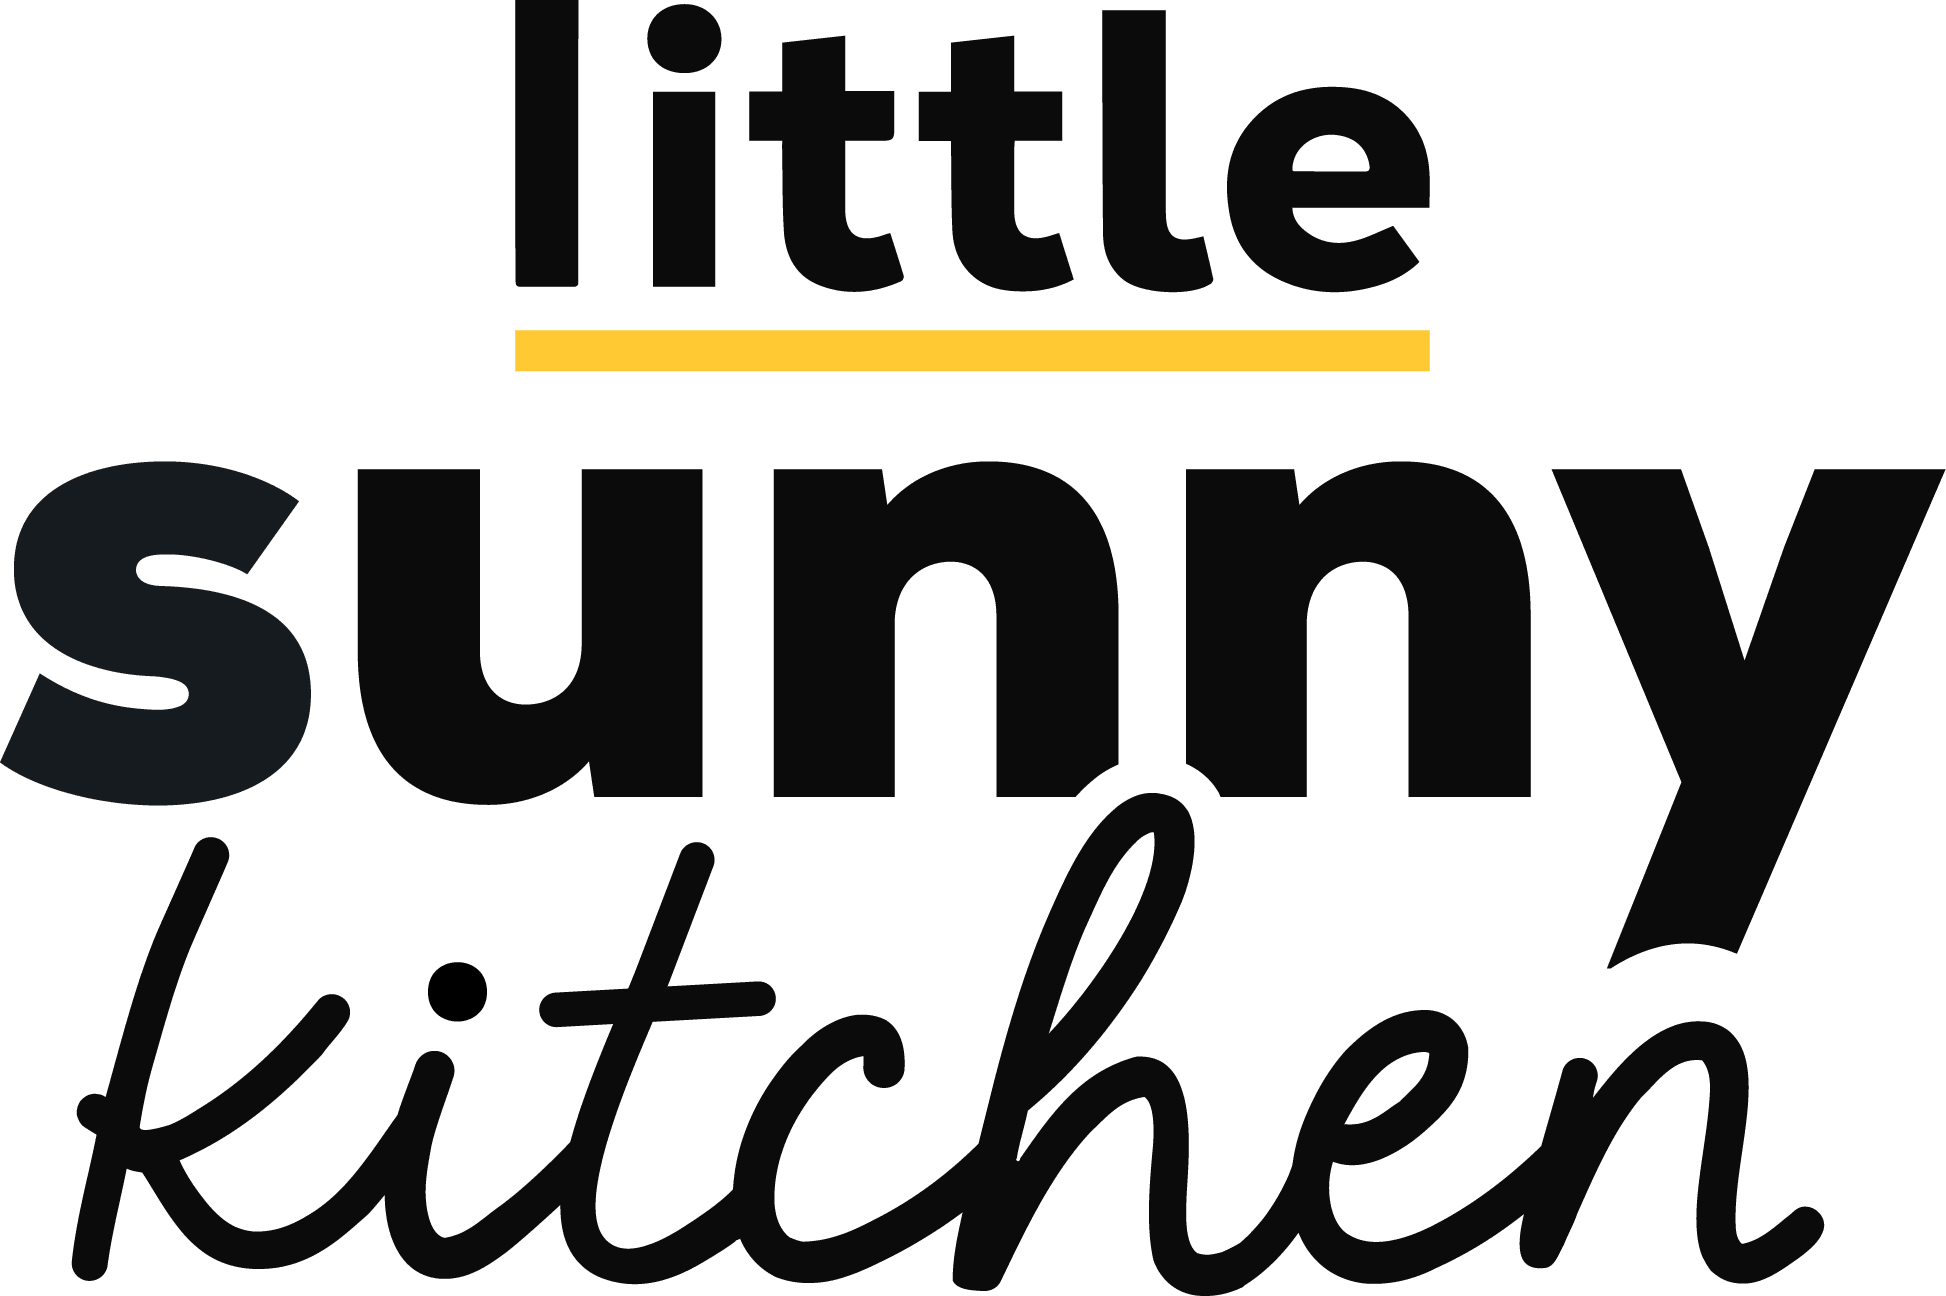 Crushed New Potatoes Recipe - Little Sunny Kitchen